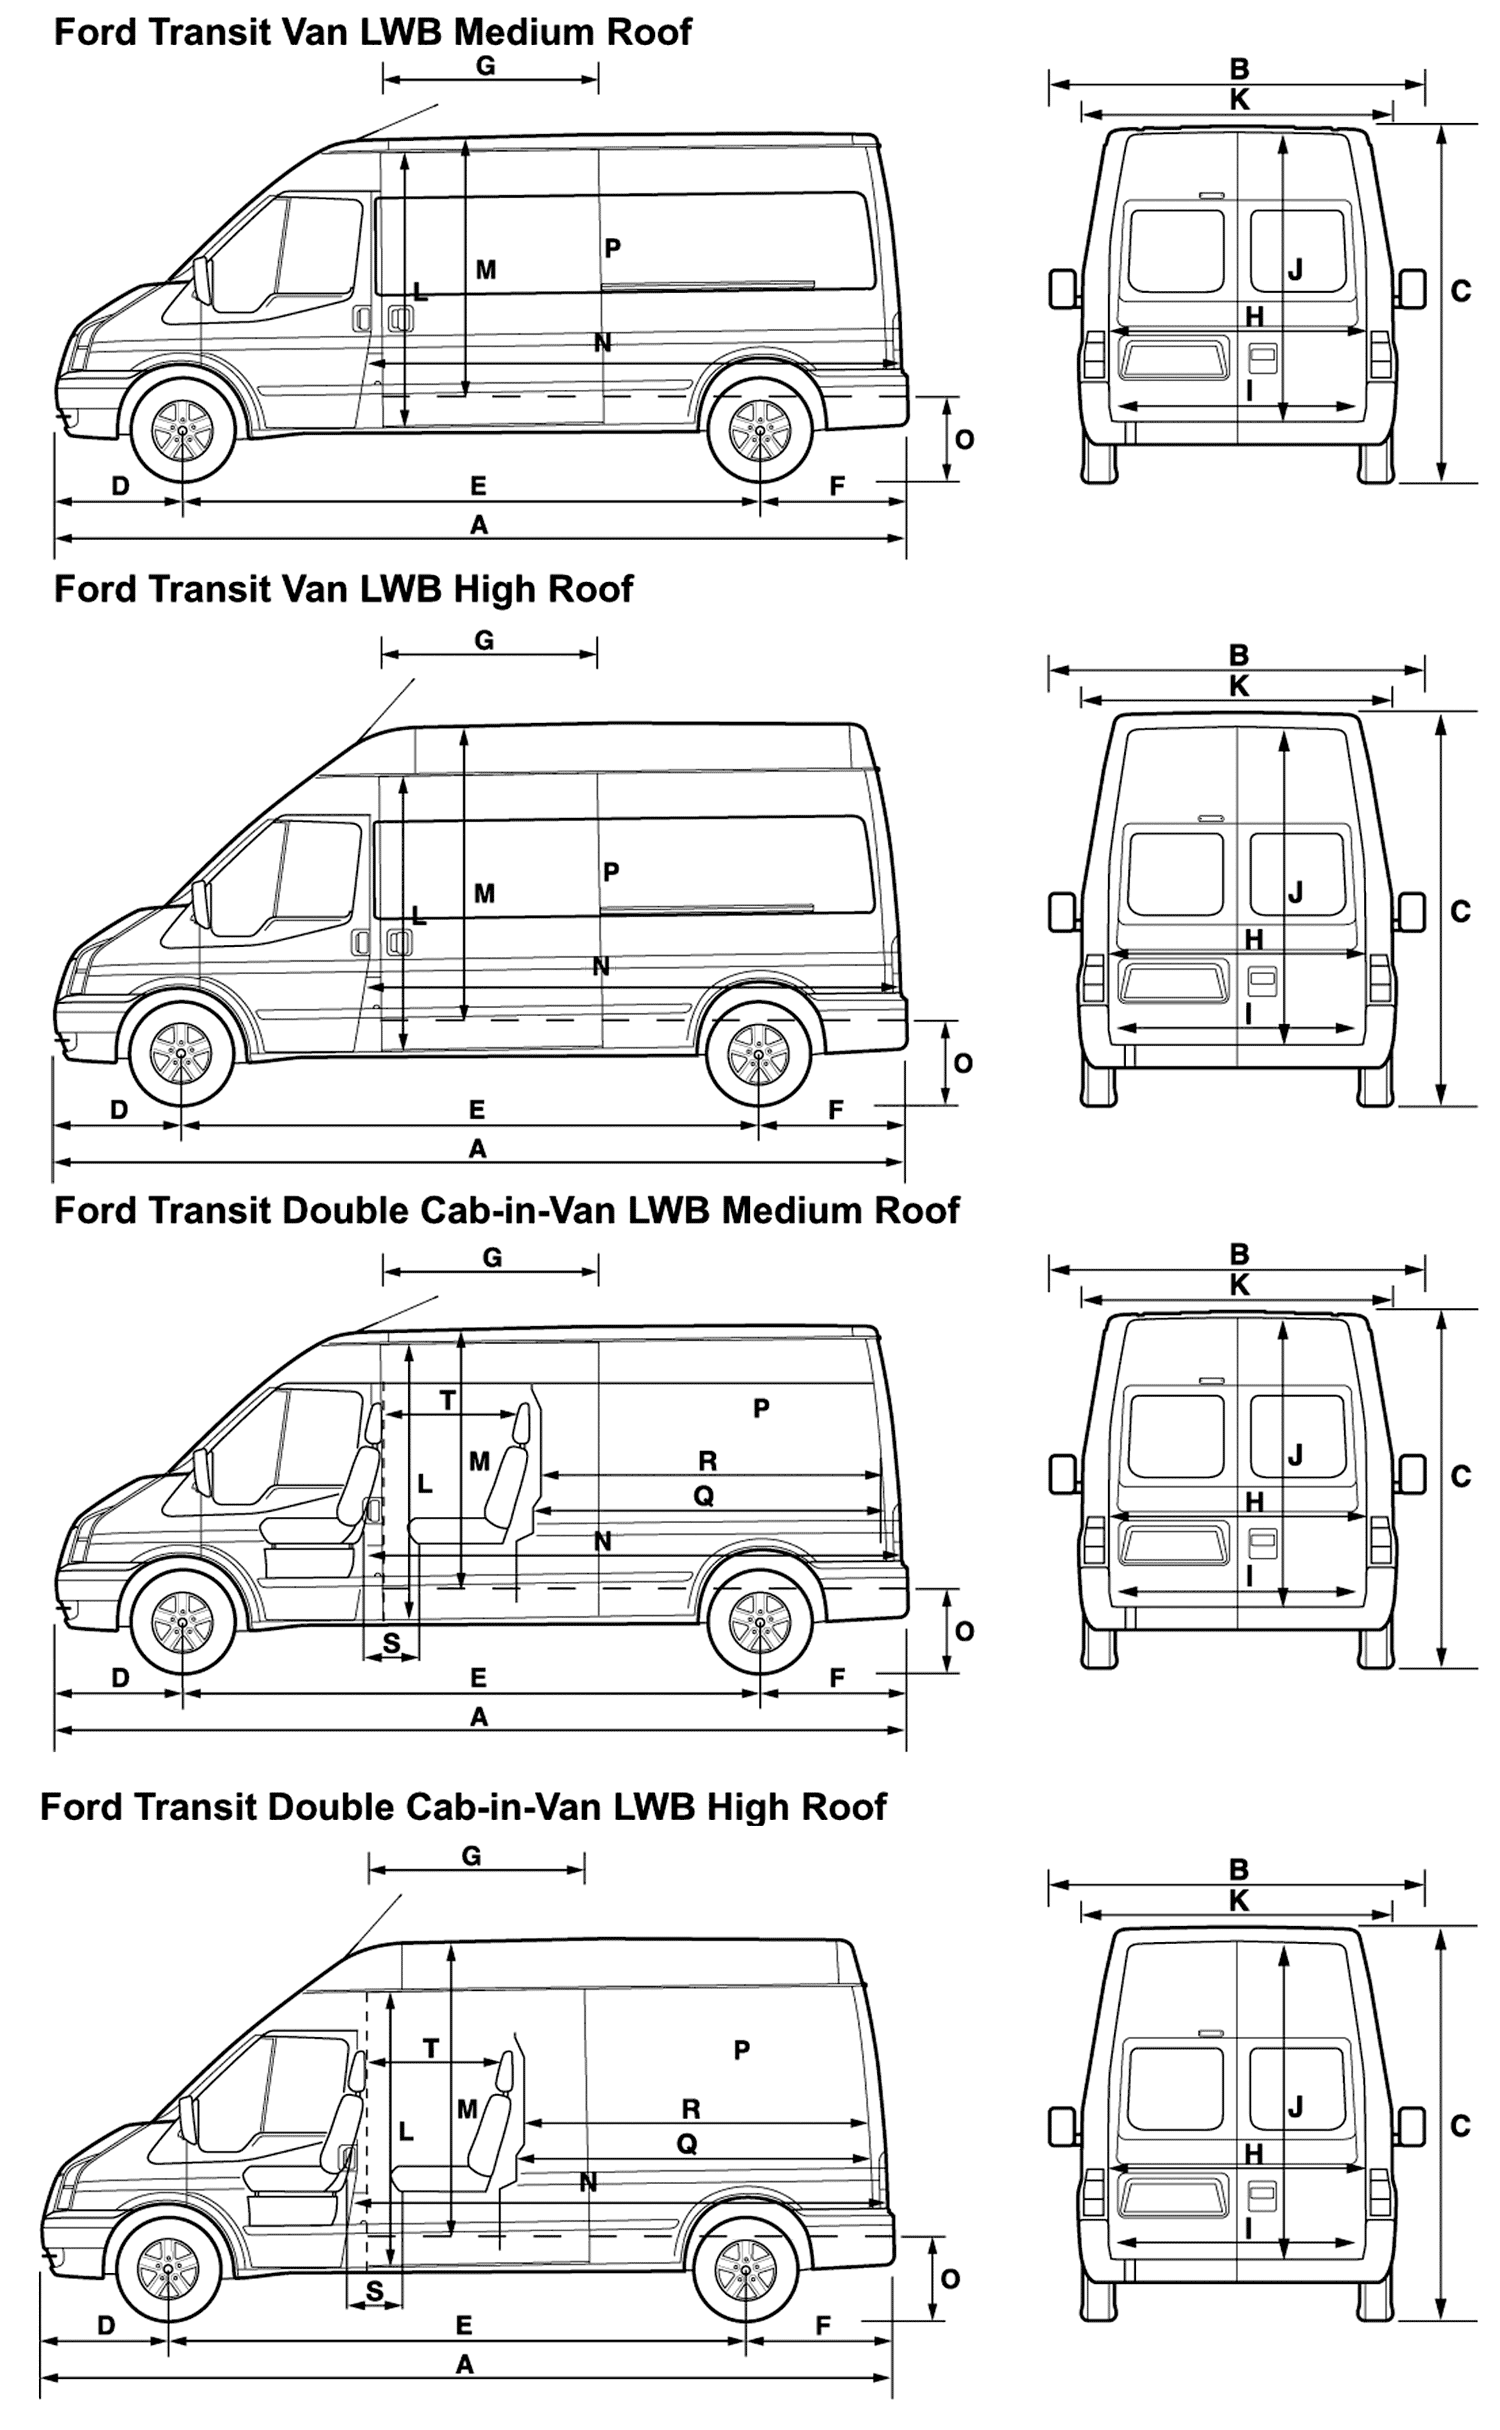 Ford transit van technical drawing #1